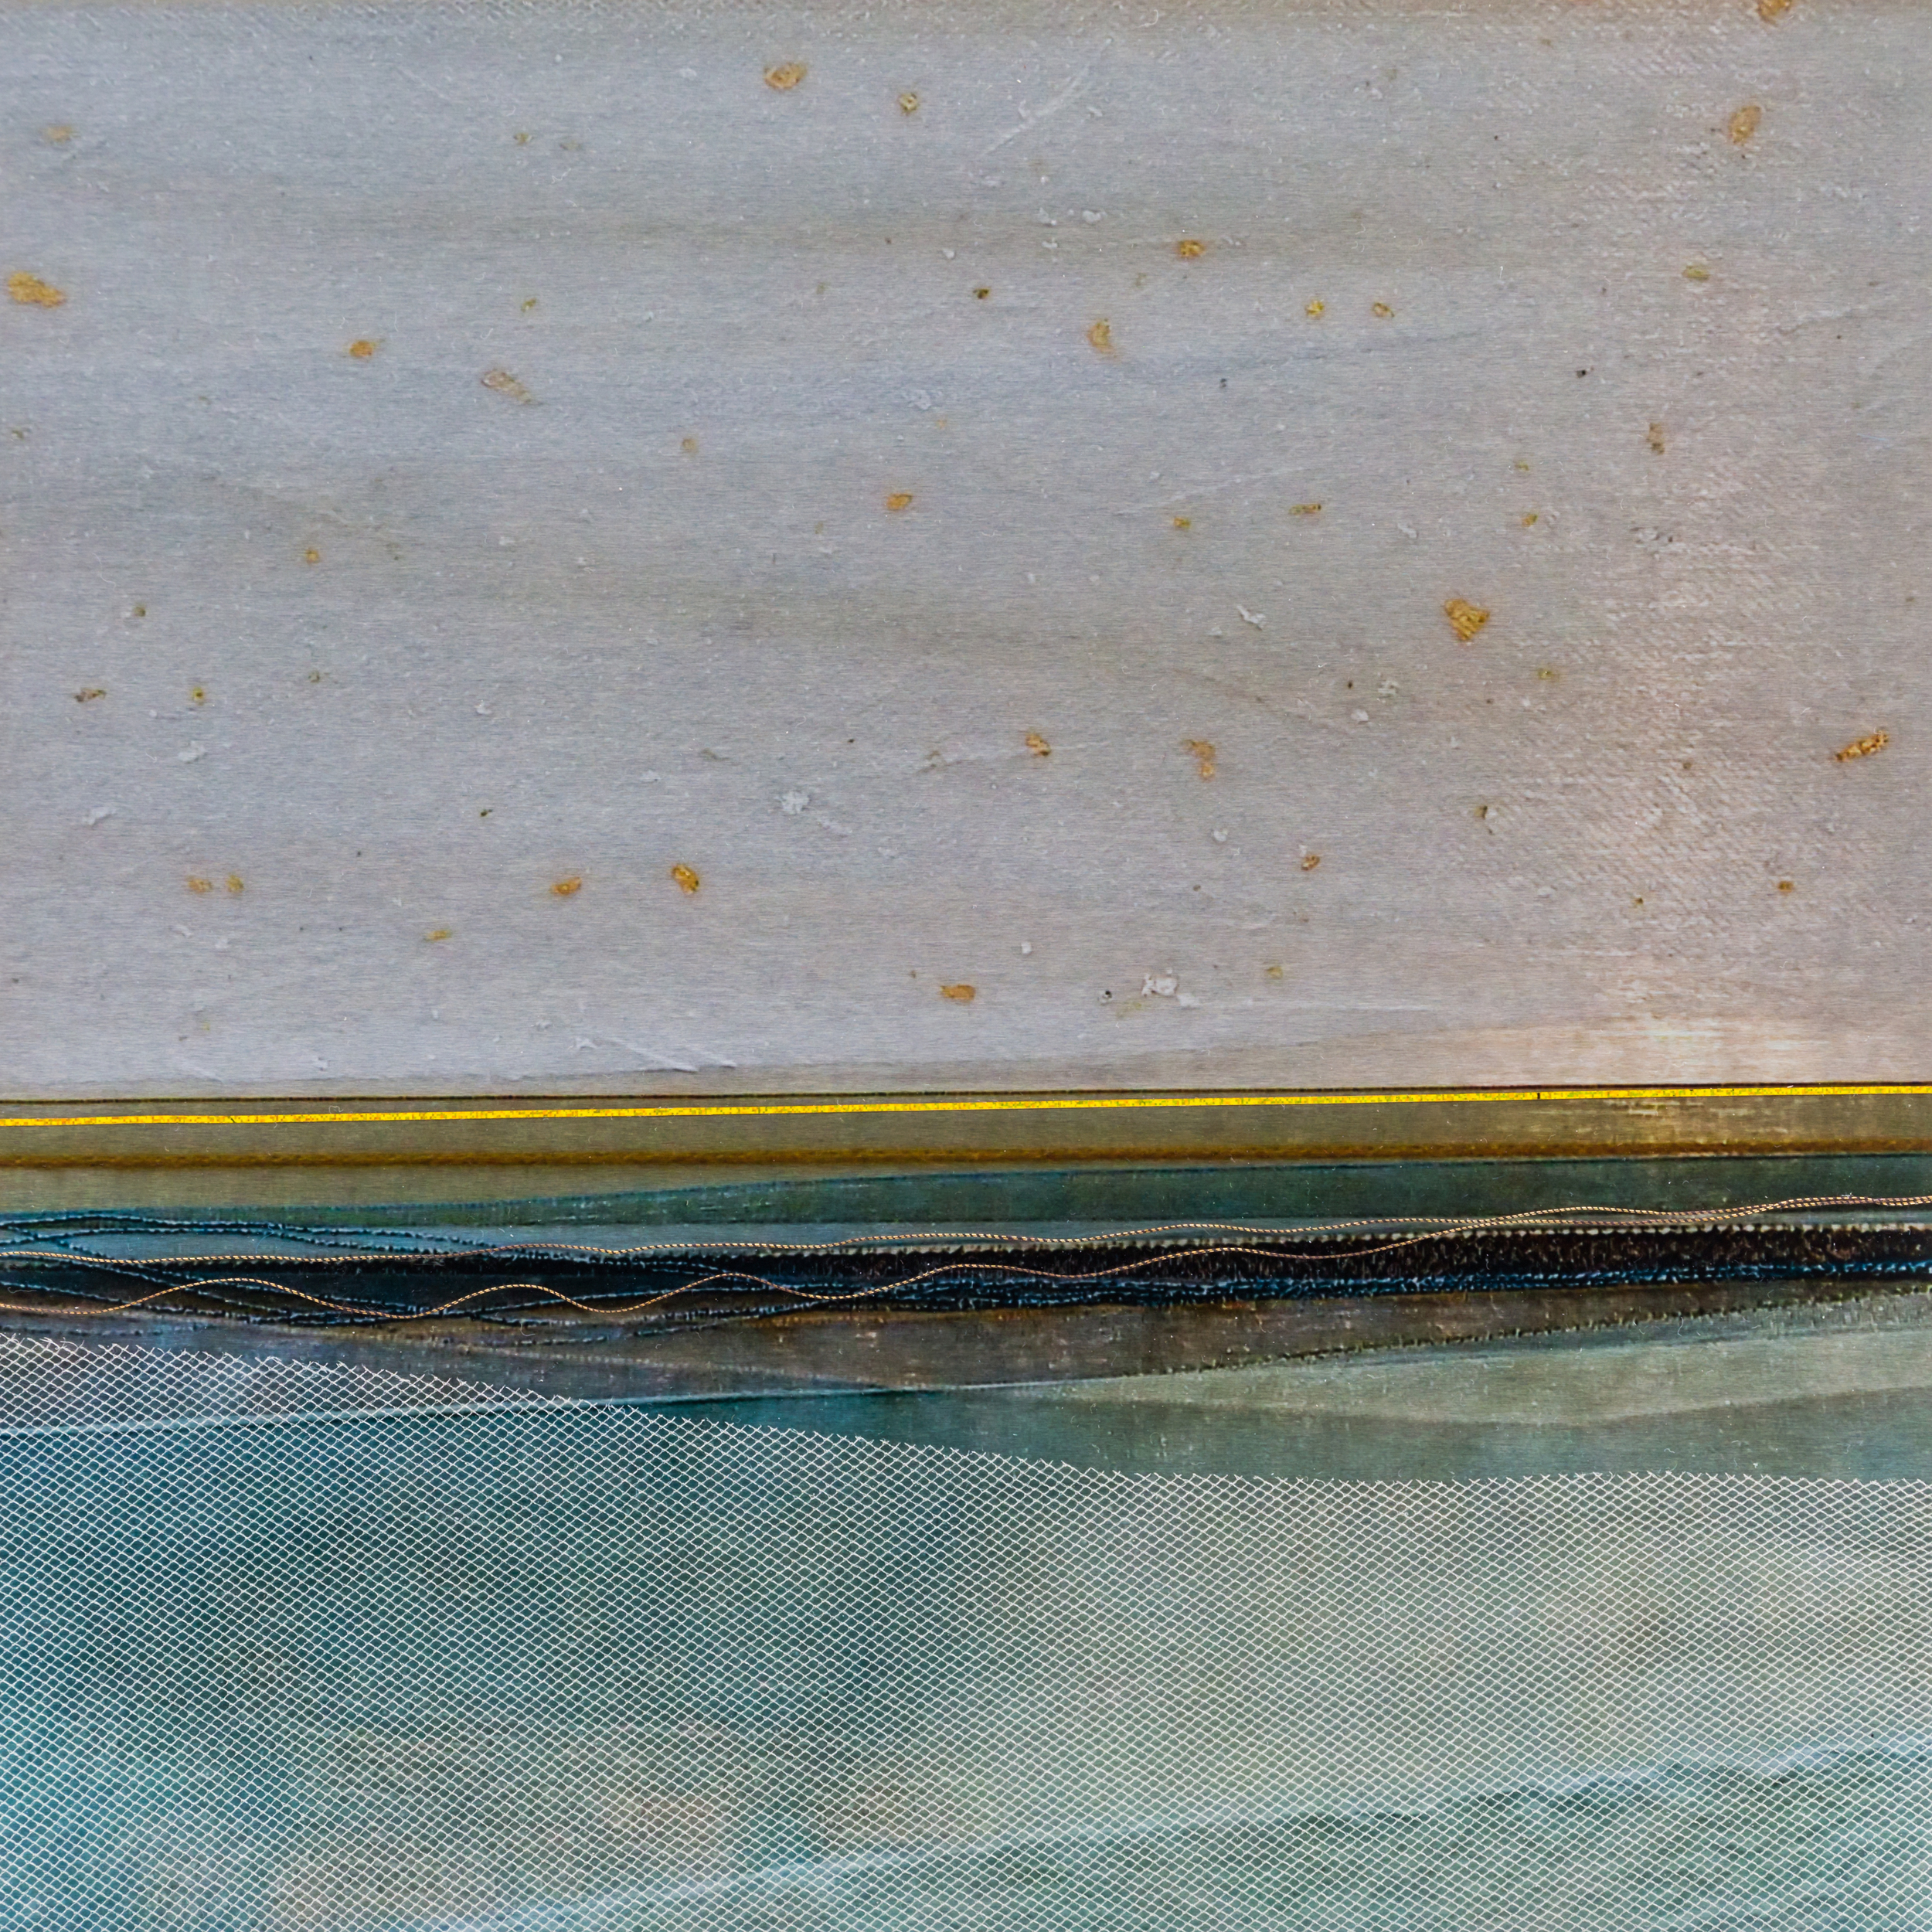   Waterscapes Series     Warm Waters II     8” Sq.    Metal Print with Silks    2015  